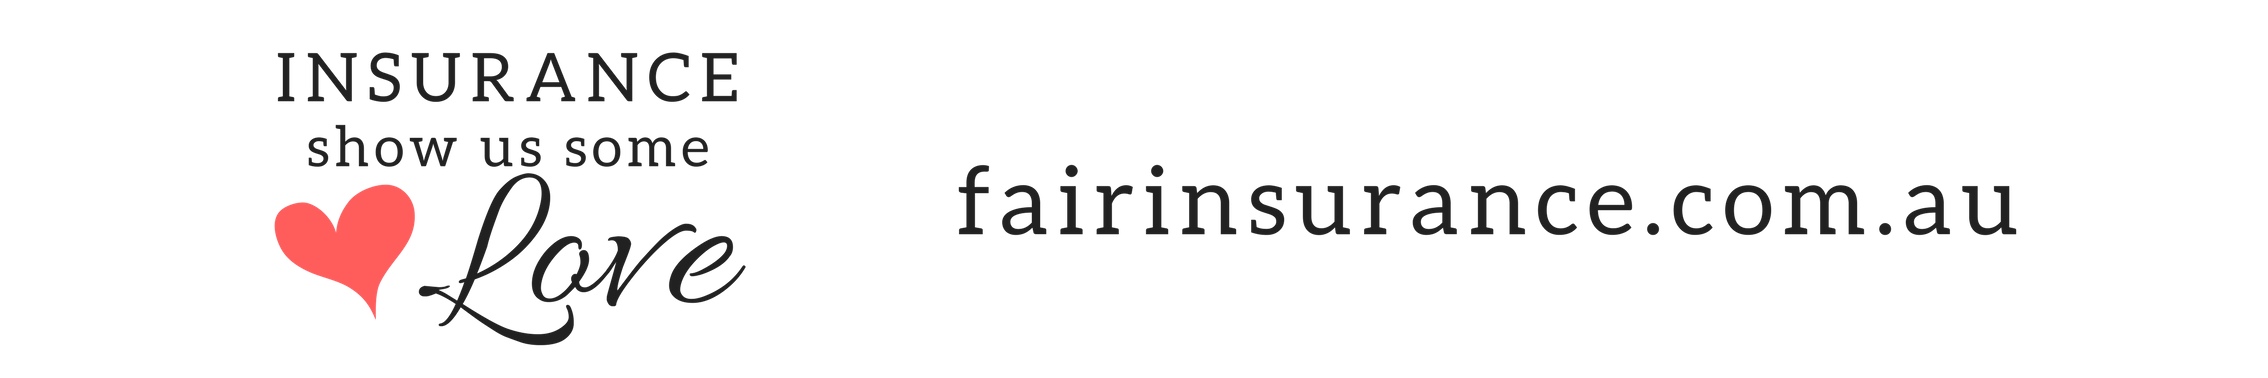 Fairinsurance.com.au